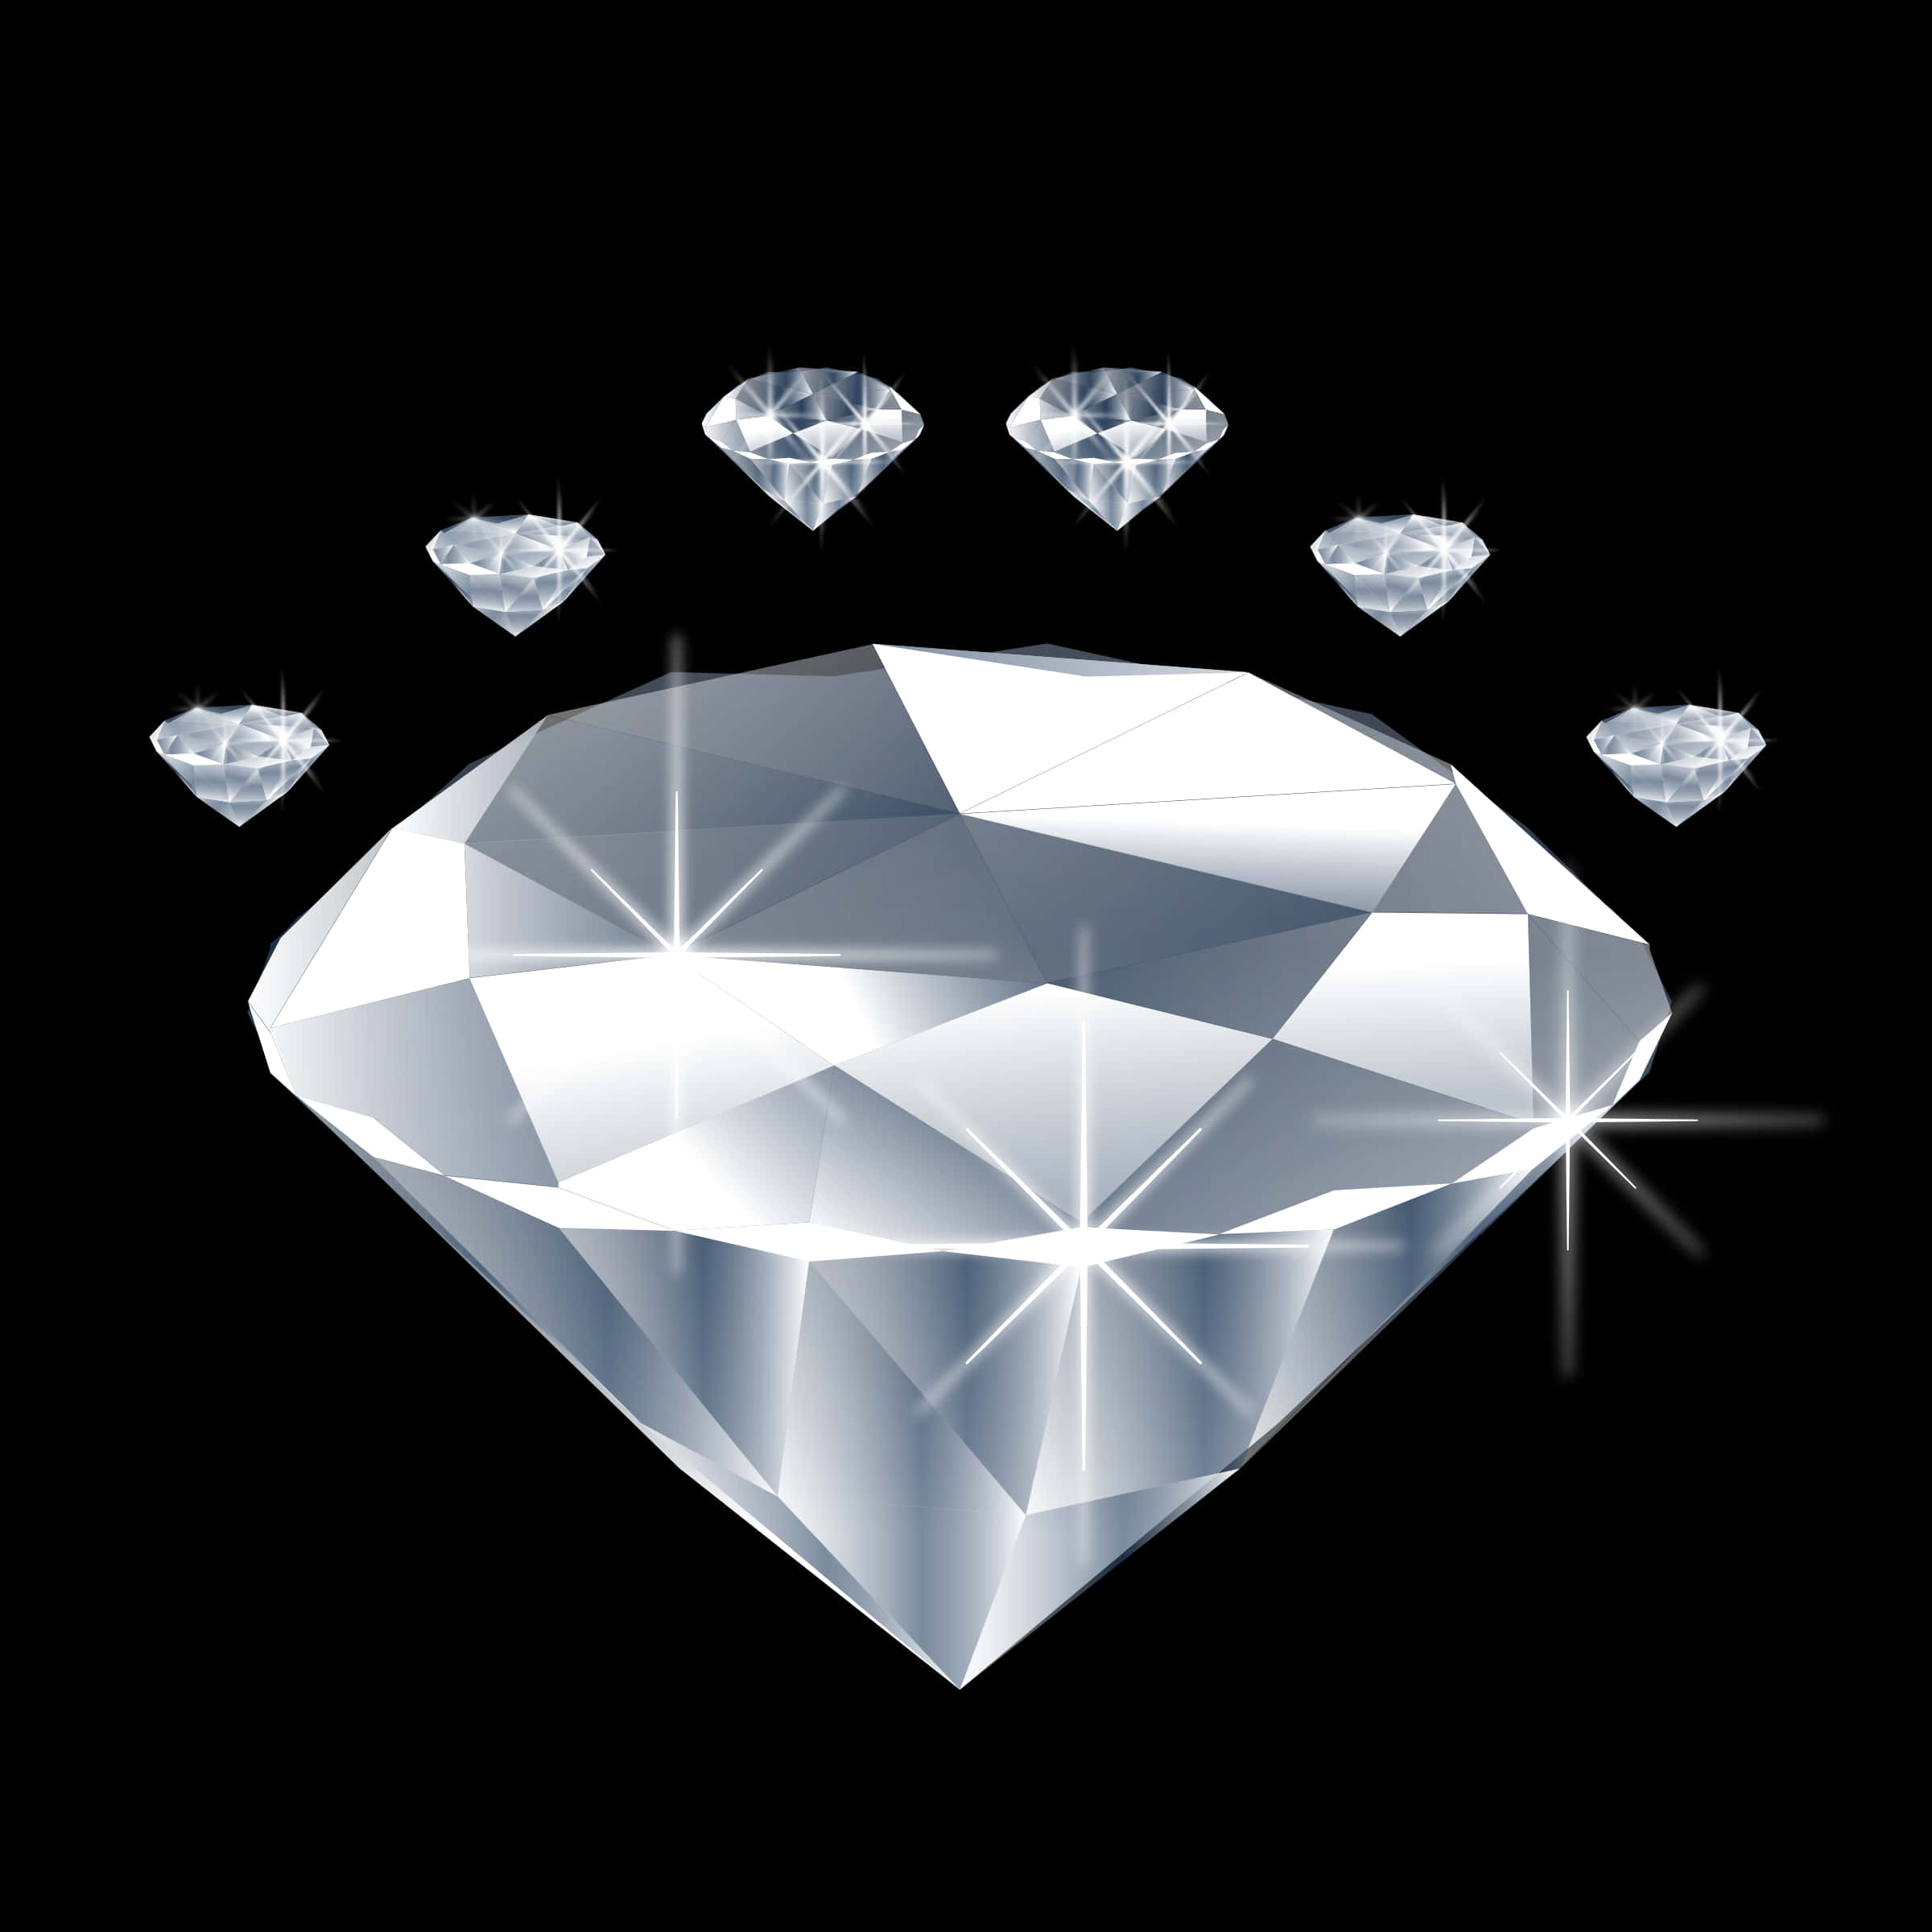 A Diamond With Many Diamonds On It